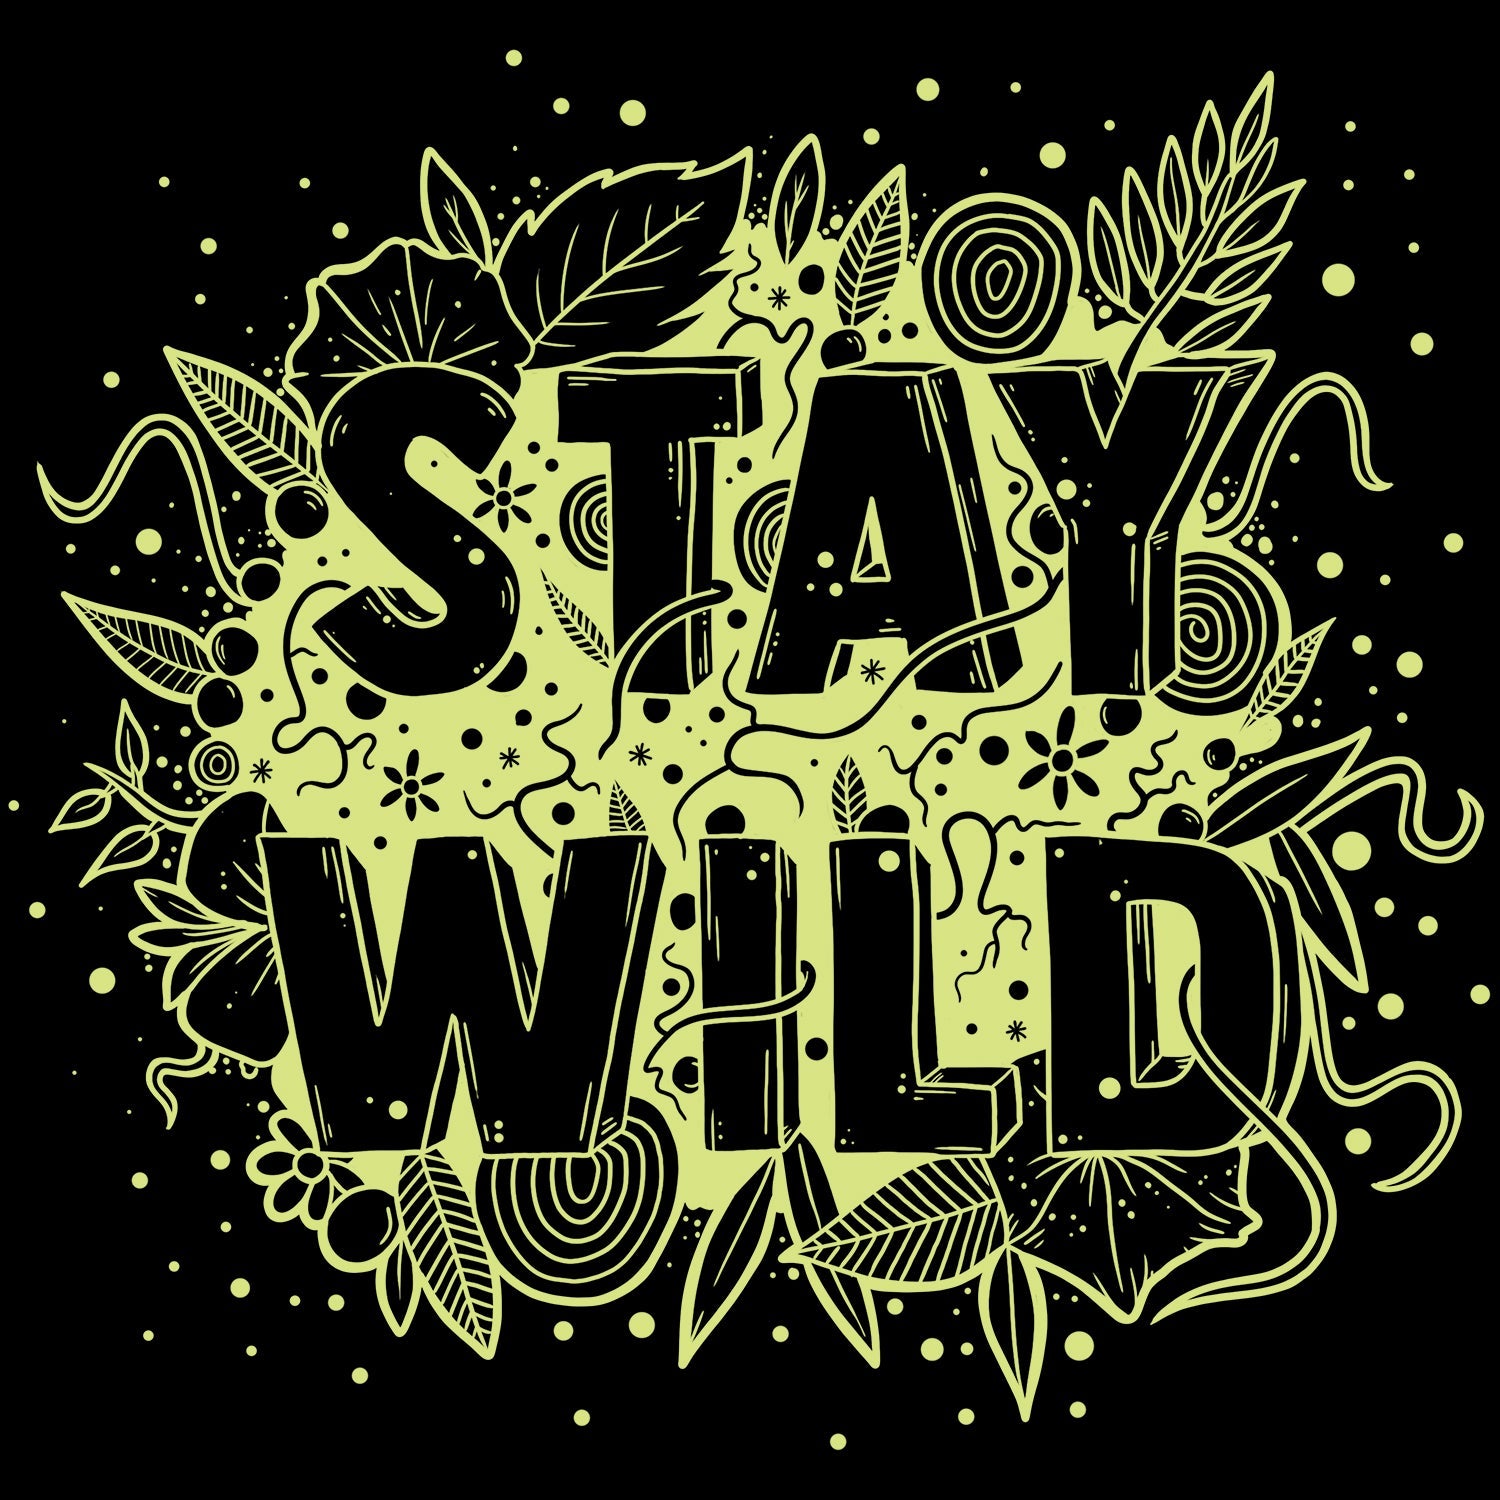 Stay Wild T Shirt